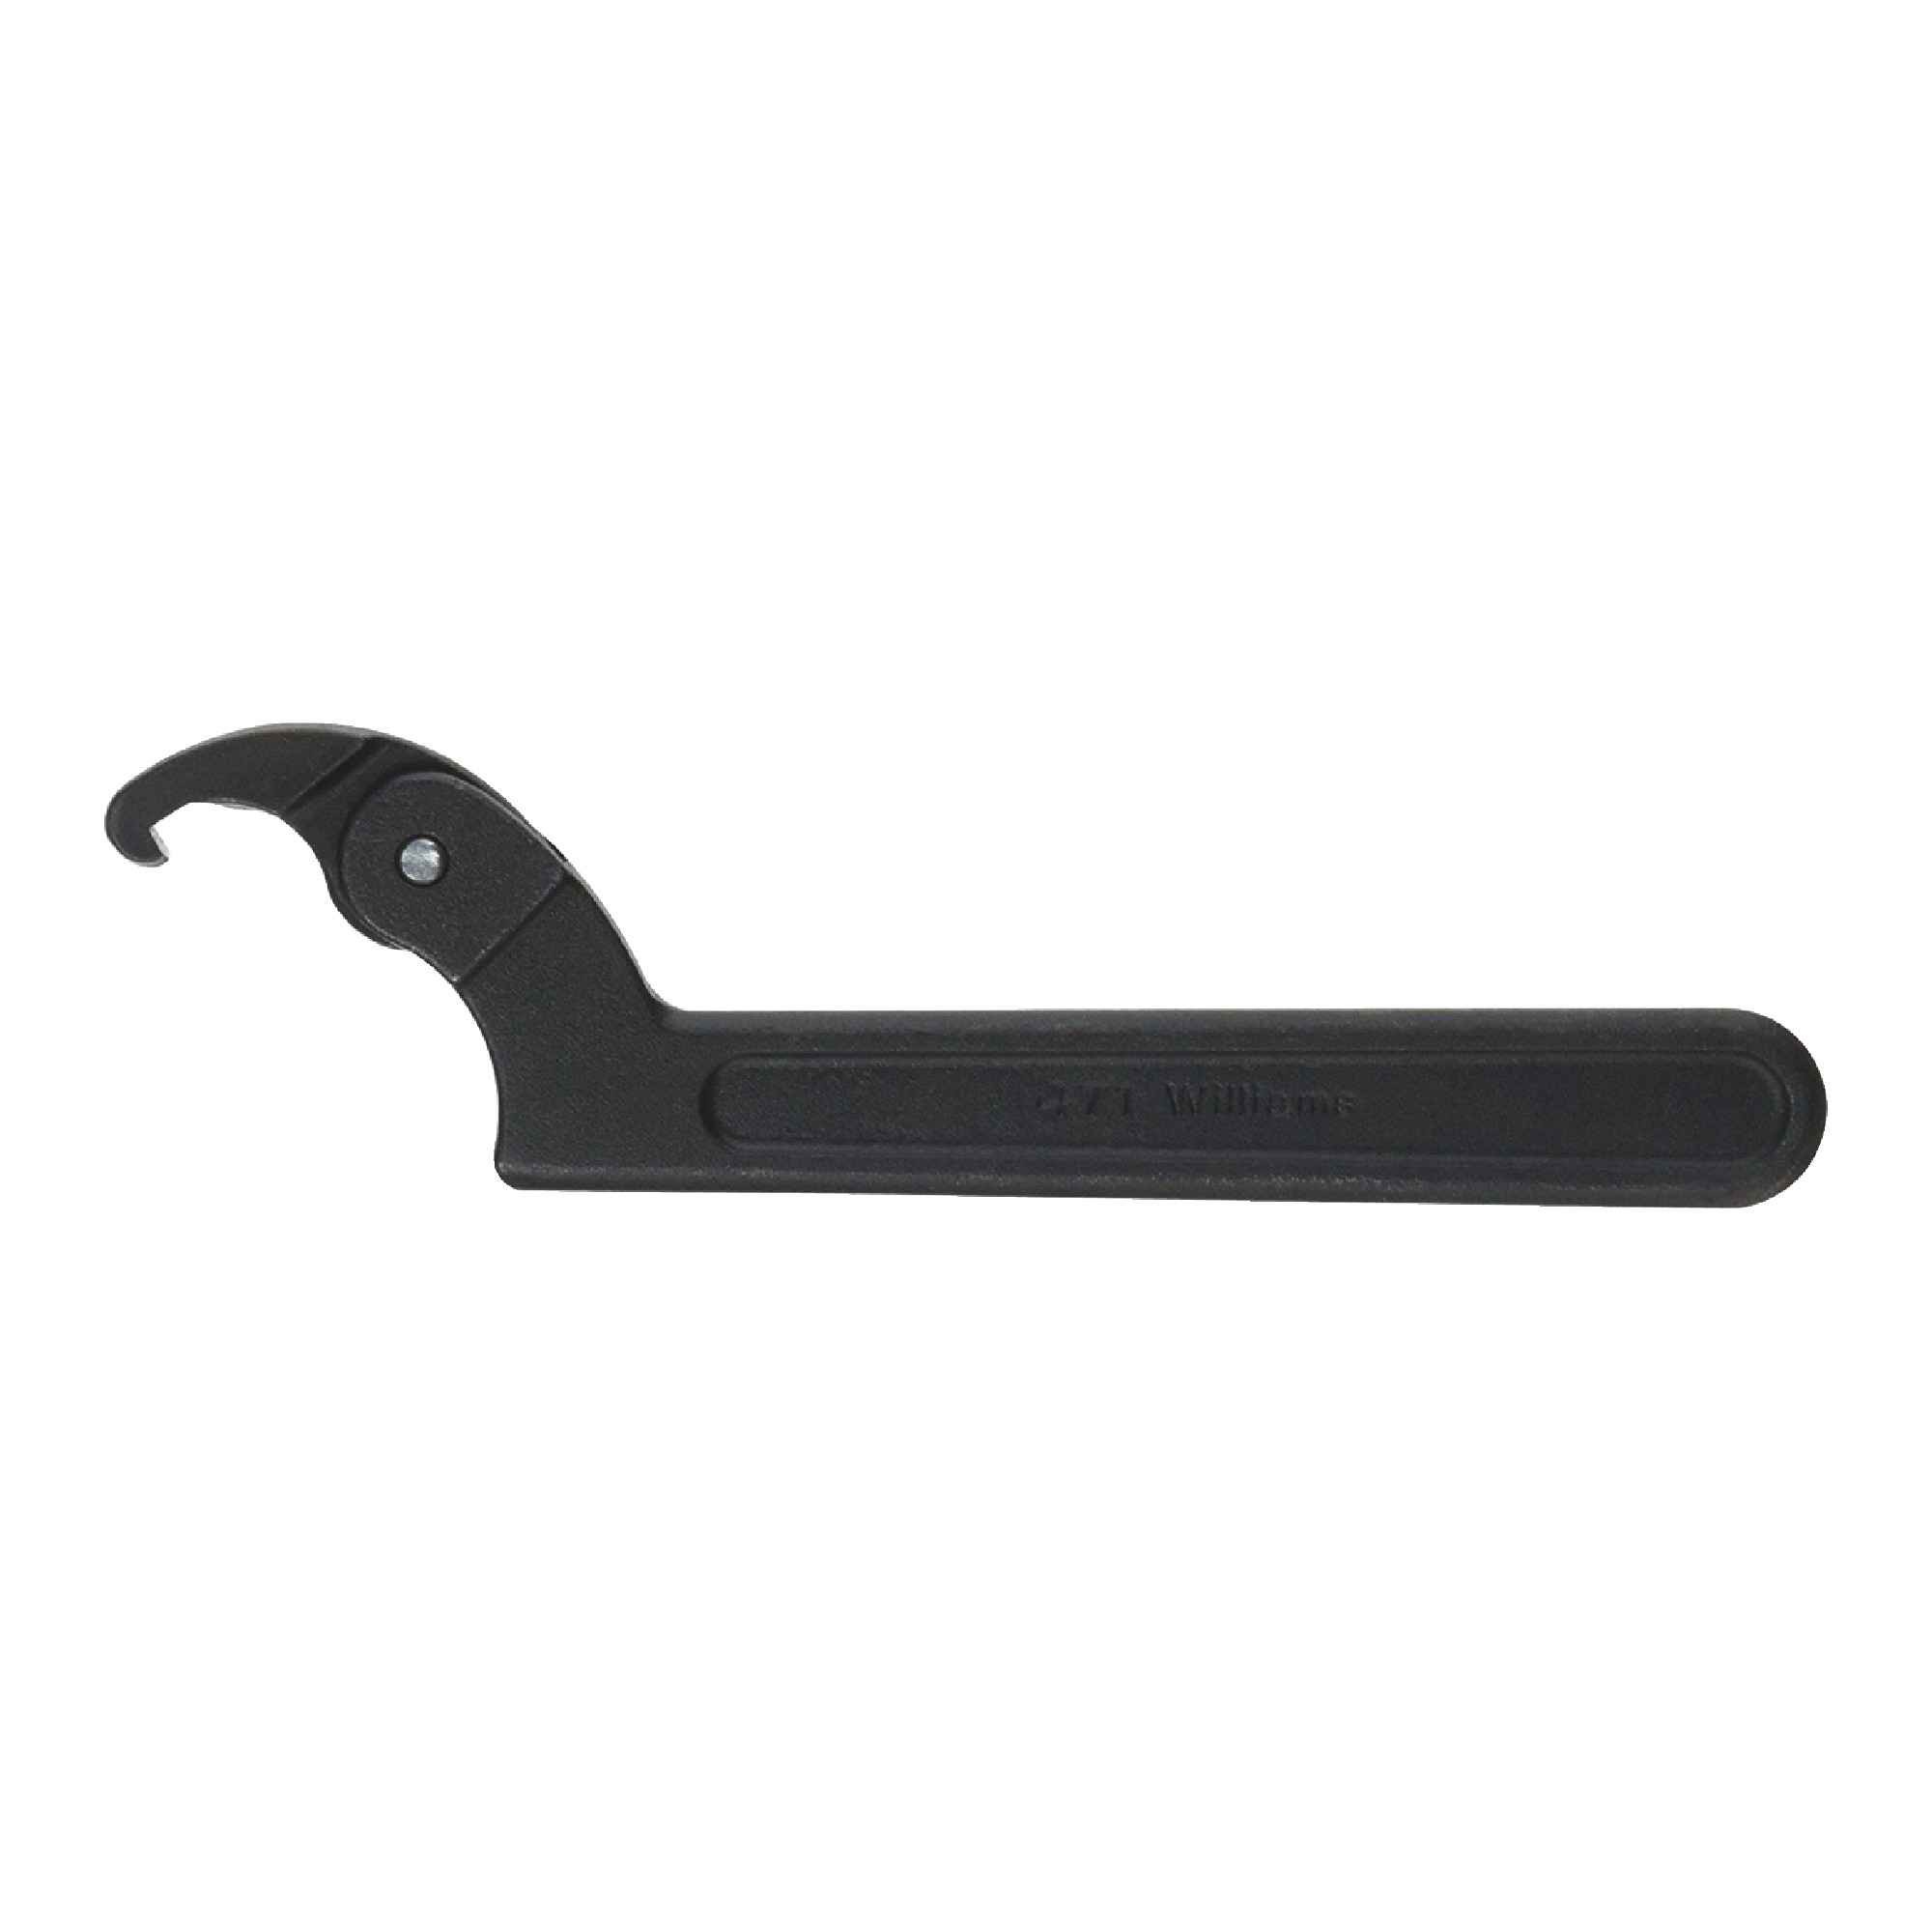 Adjustable Hook Spanner Wrench - Model: 471  Diameter: 3/4" - 2"  Height: 1/8"  Overall Length: 5-3/8"